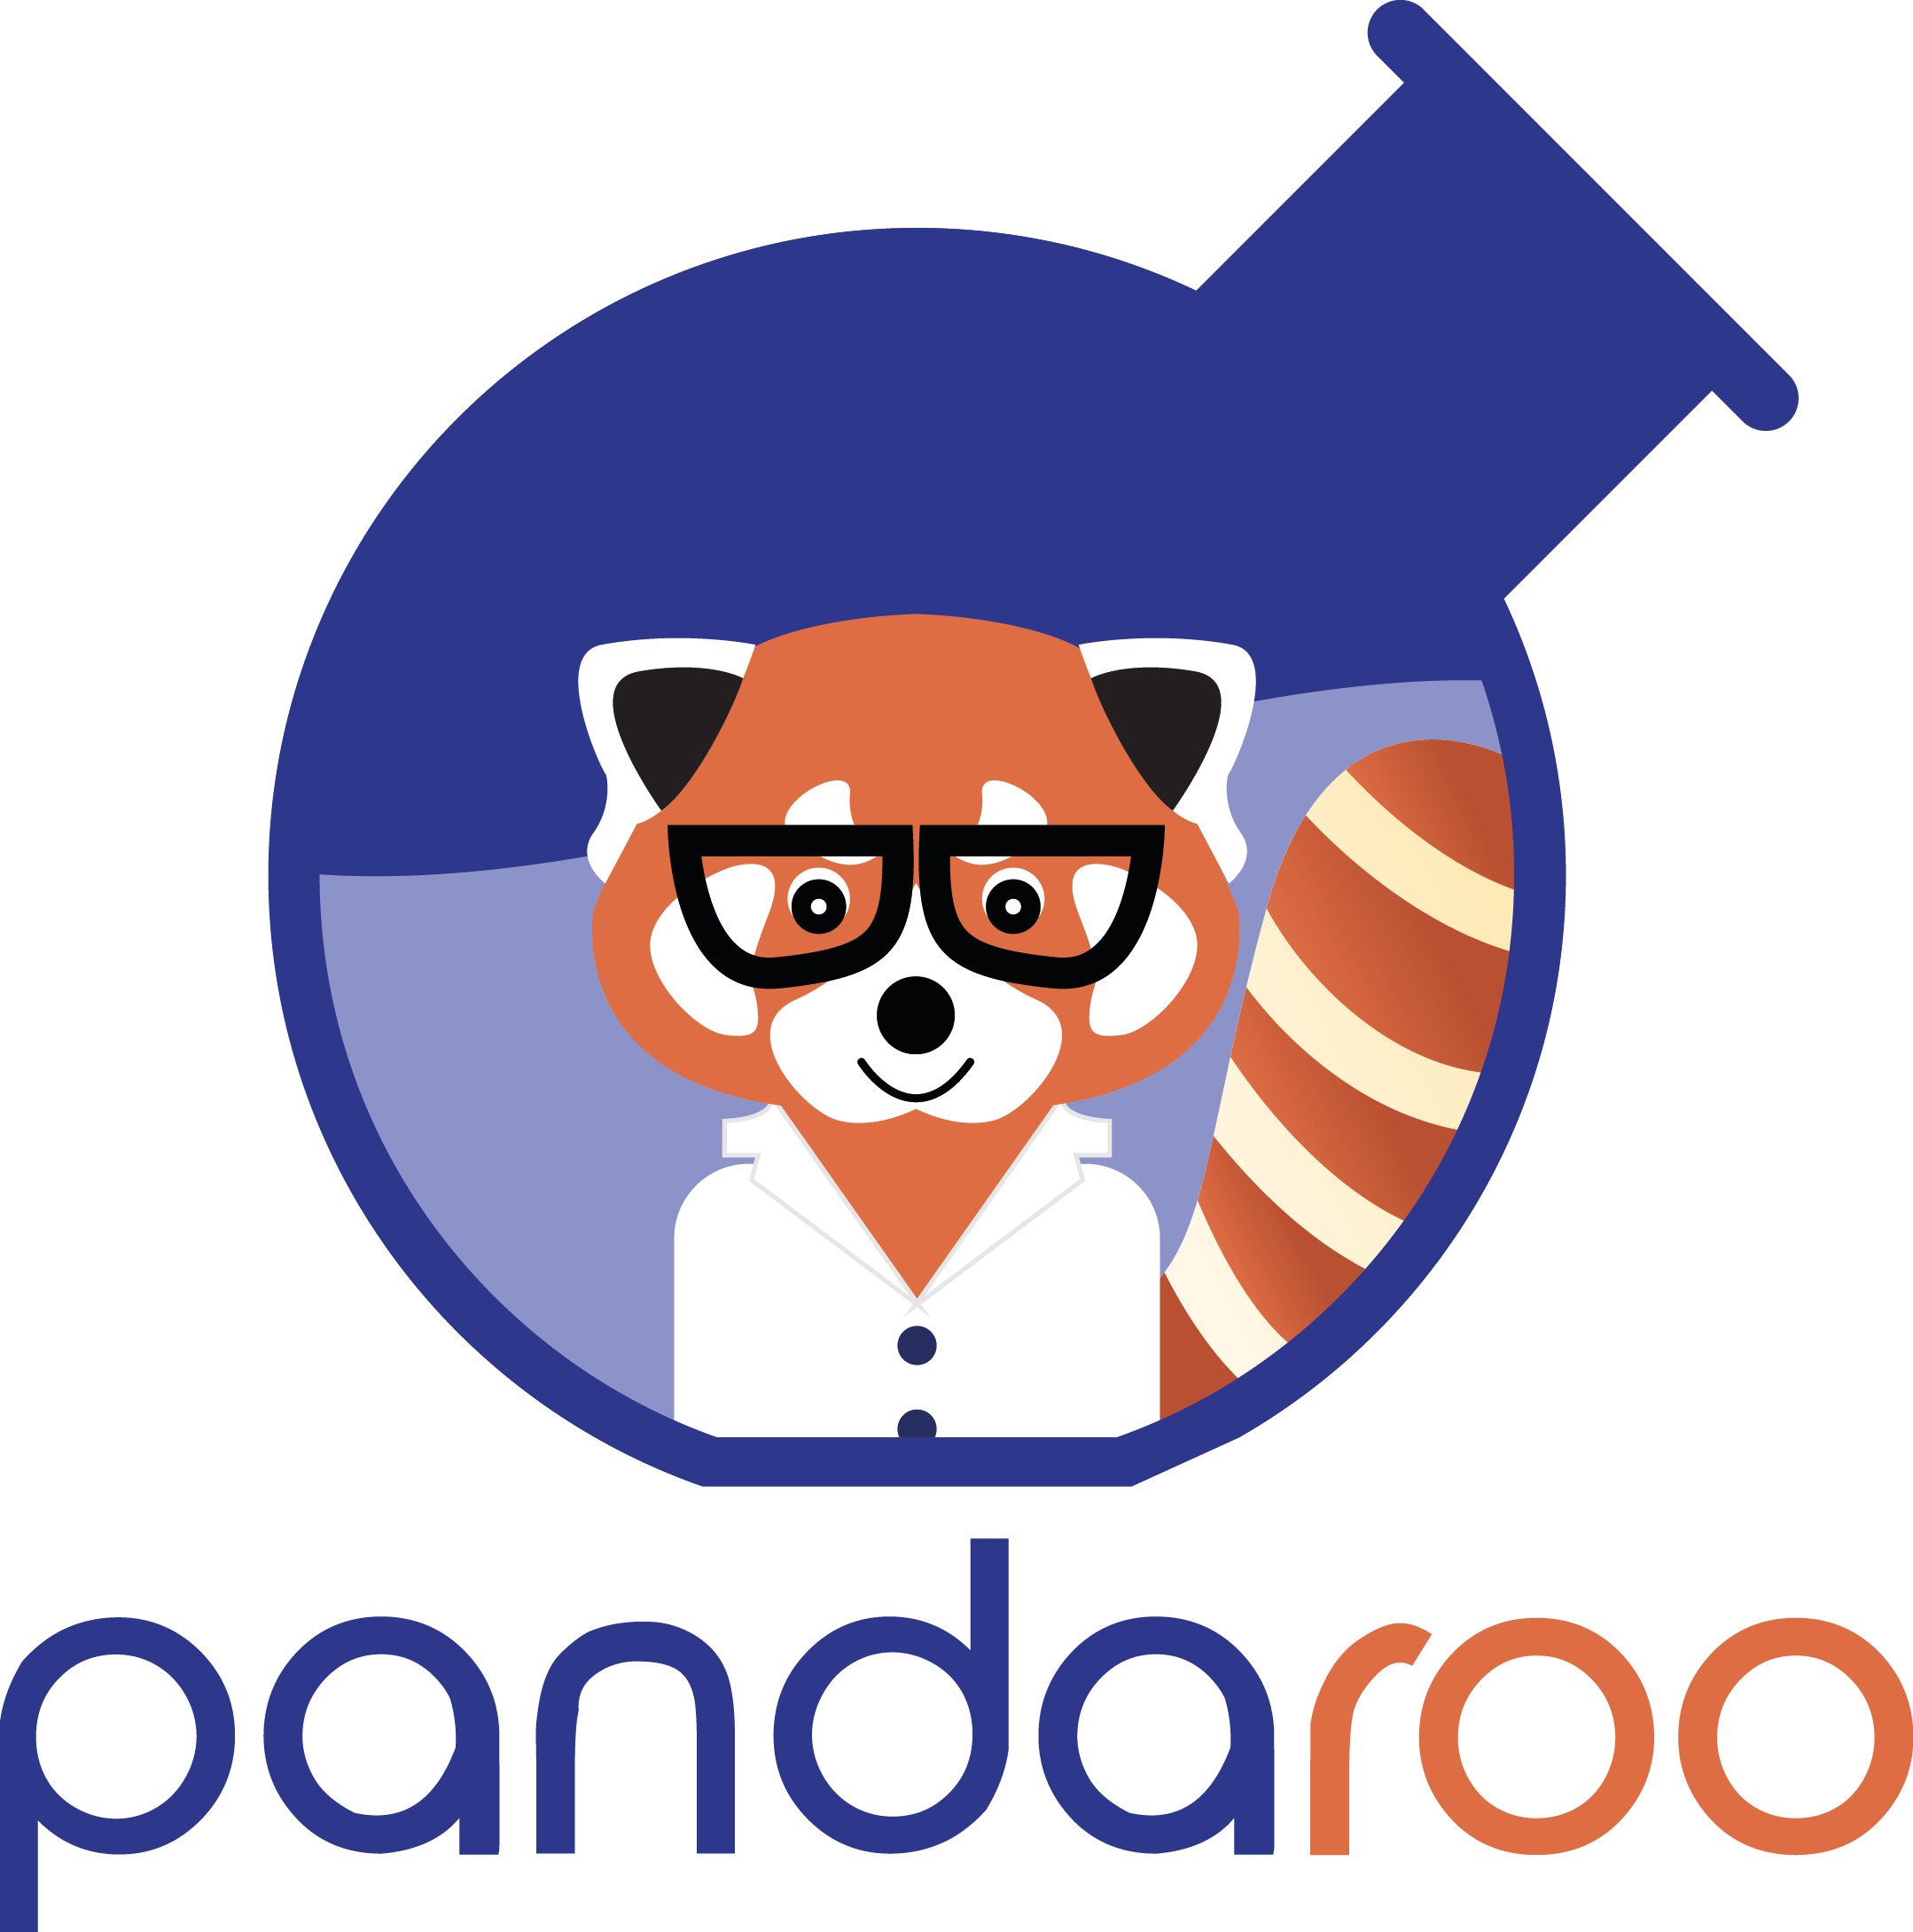 Pandaroo